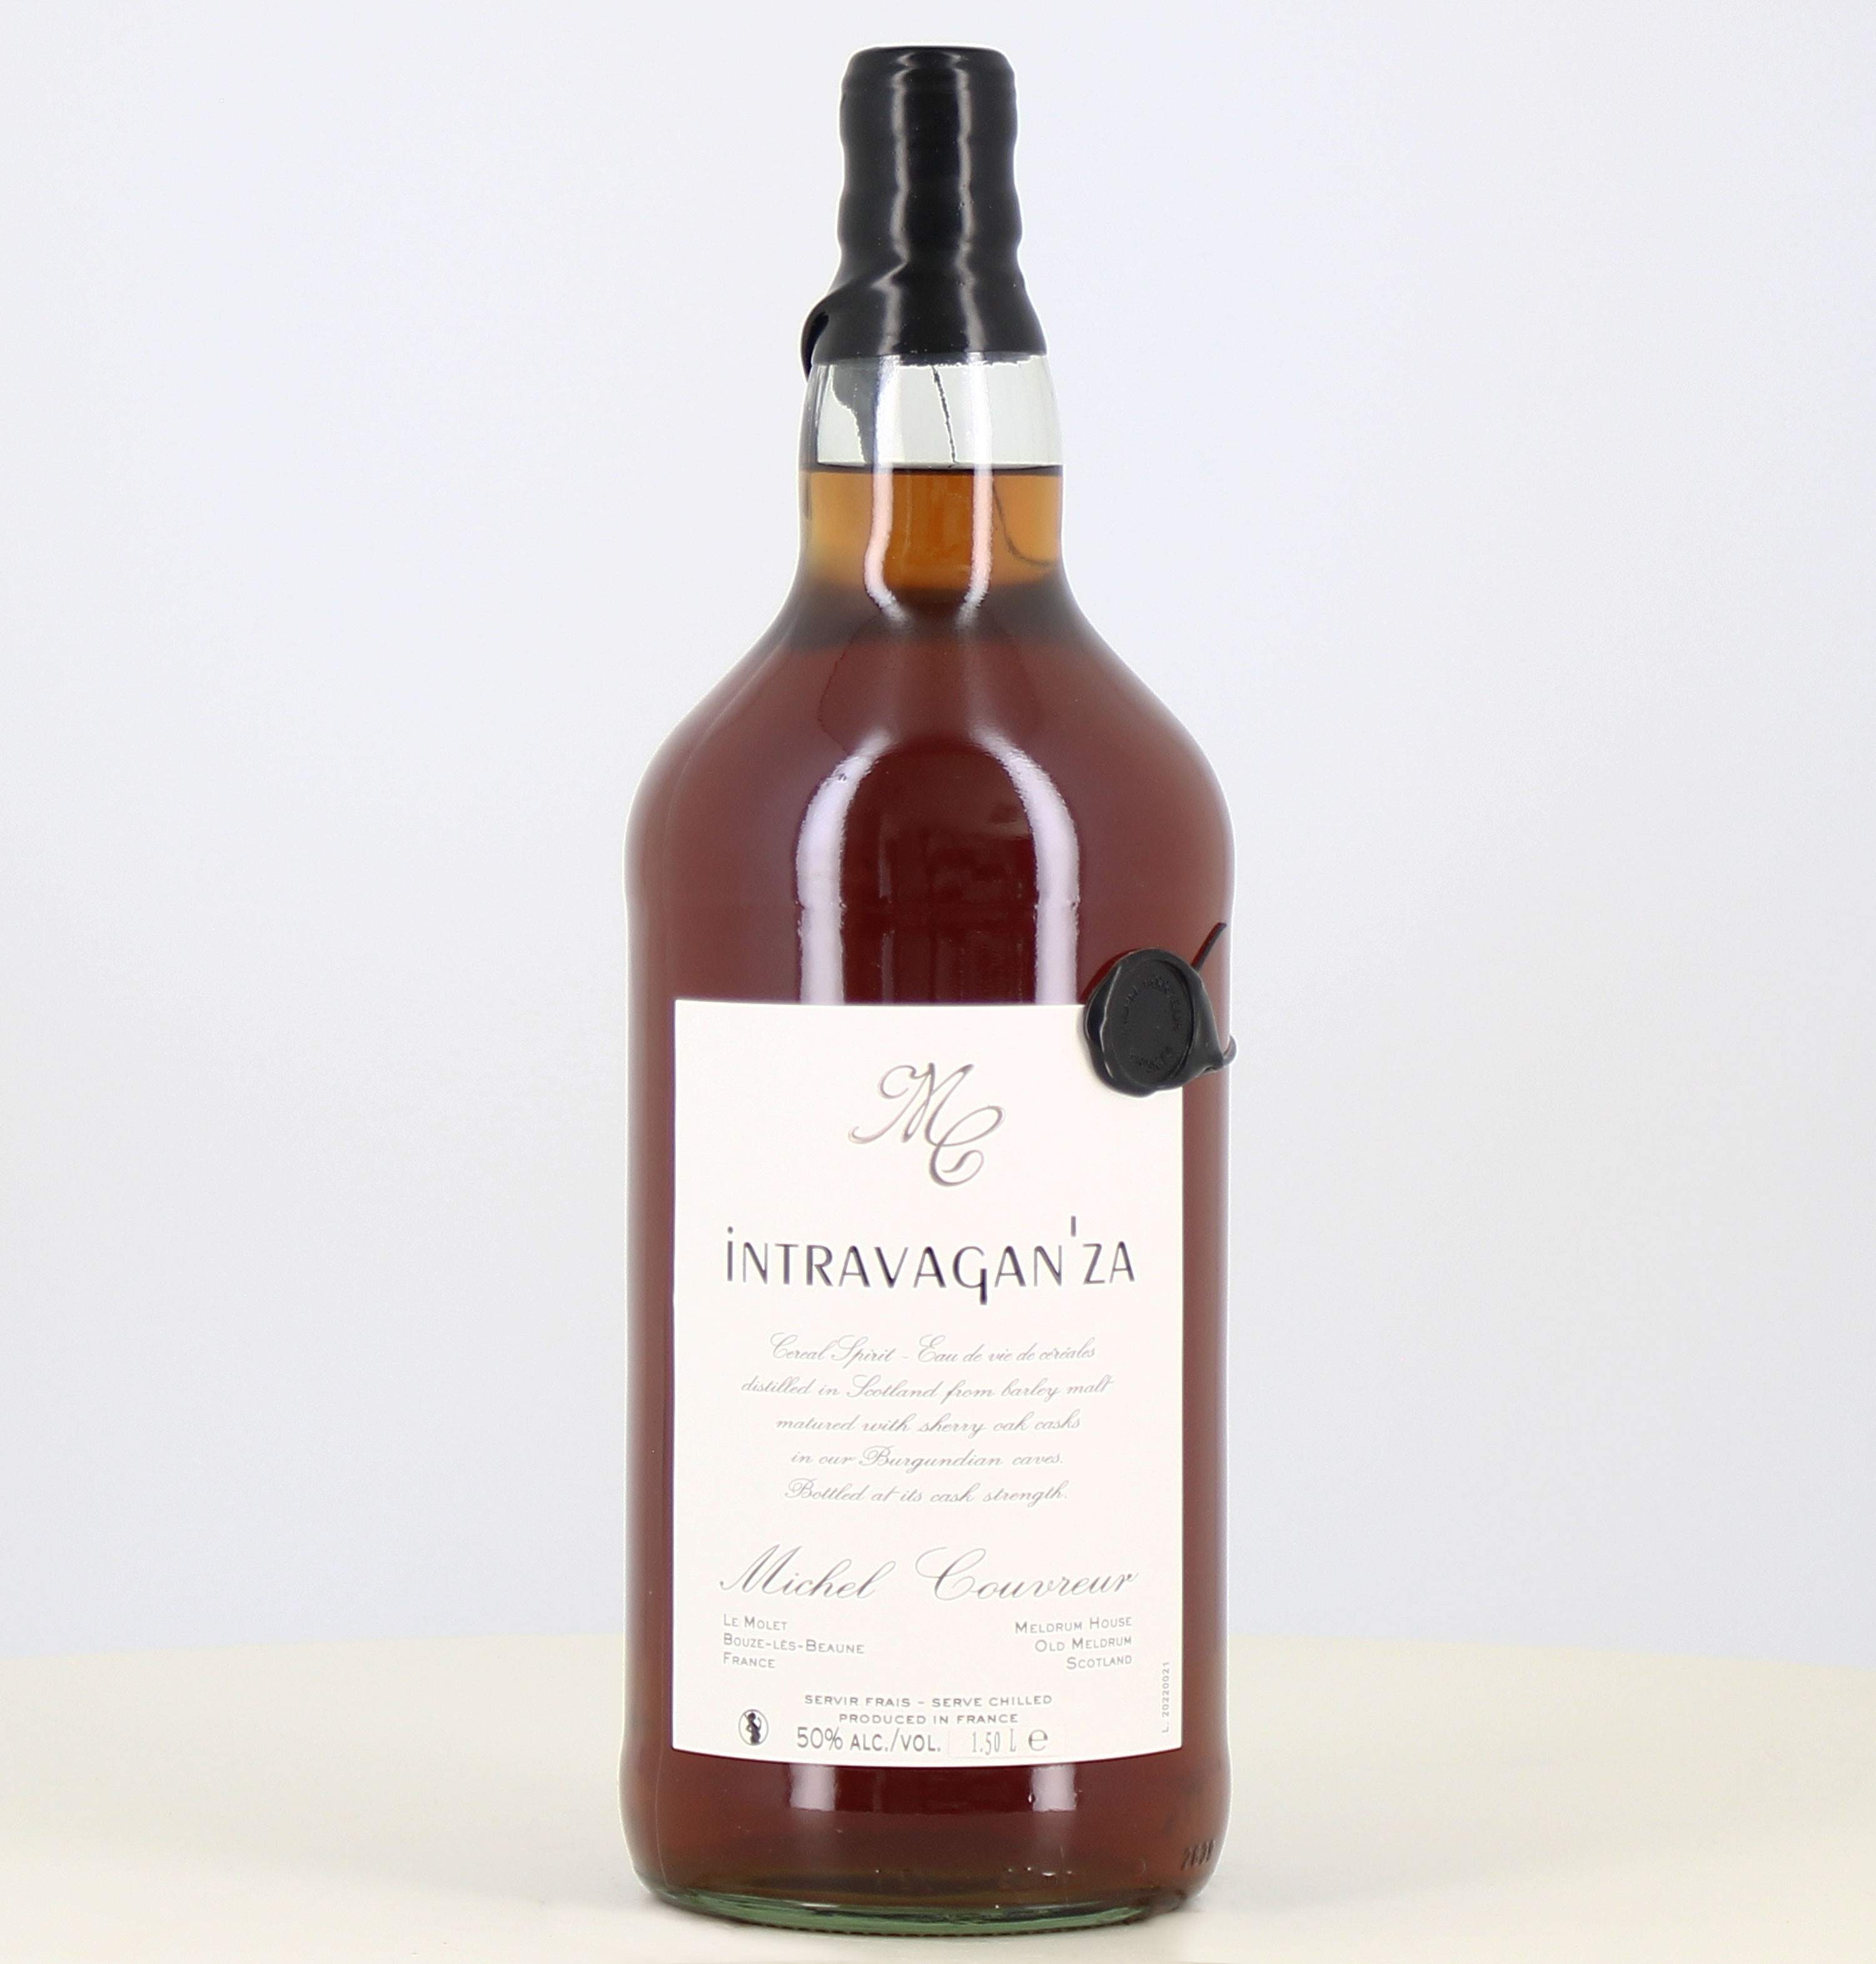 Magnum whisky michel couvreur Intravaganza Clearach 50% cereal spirit drink  - Whisky Michel Couvreur